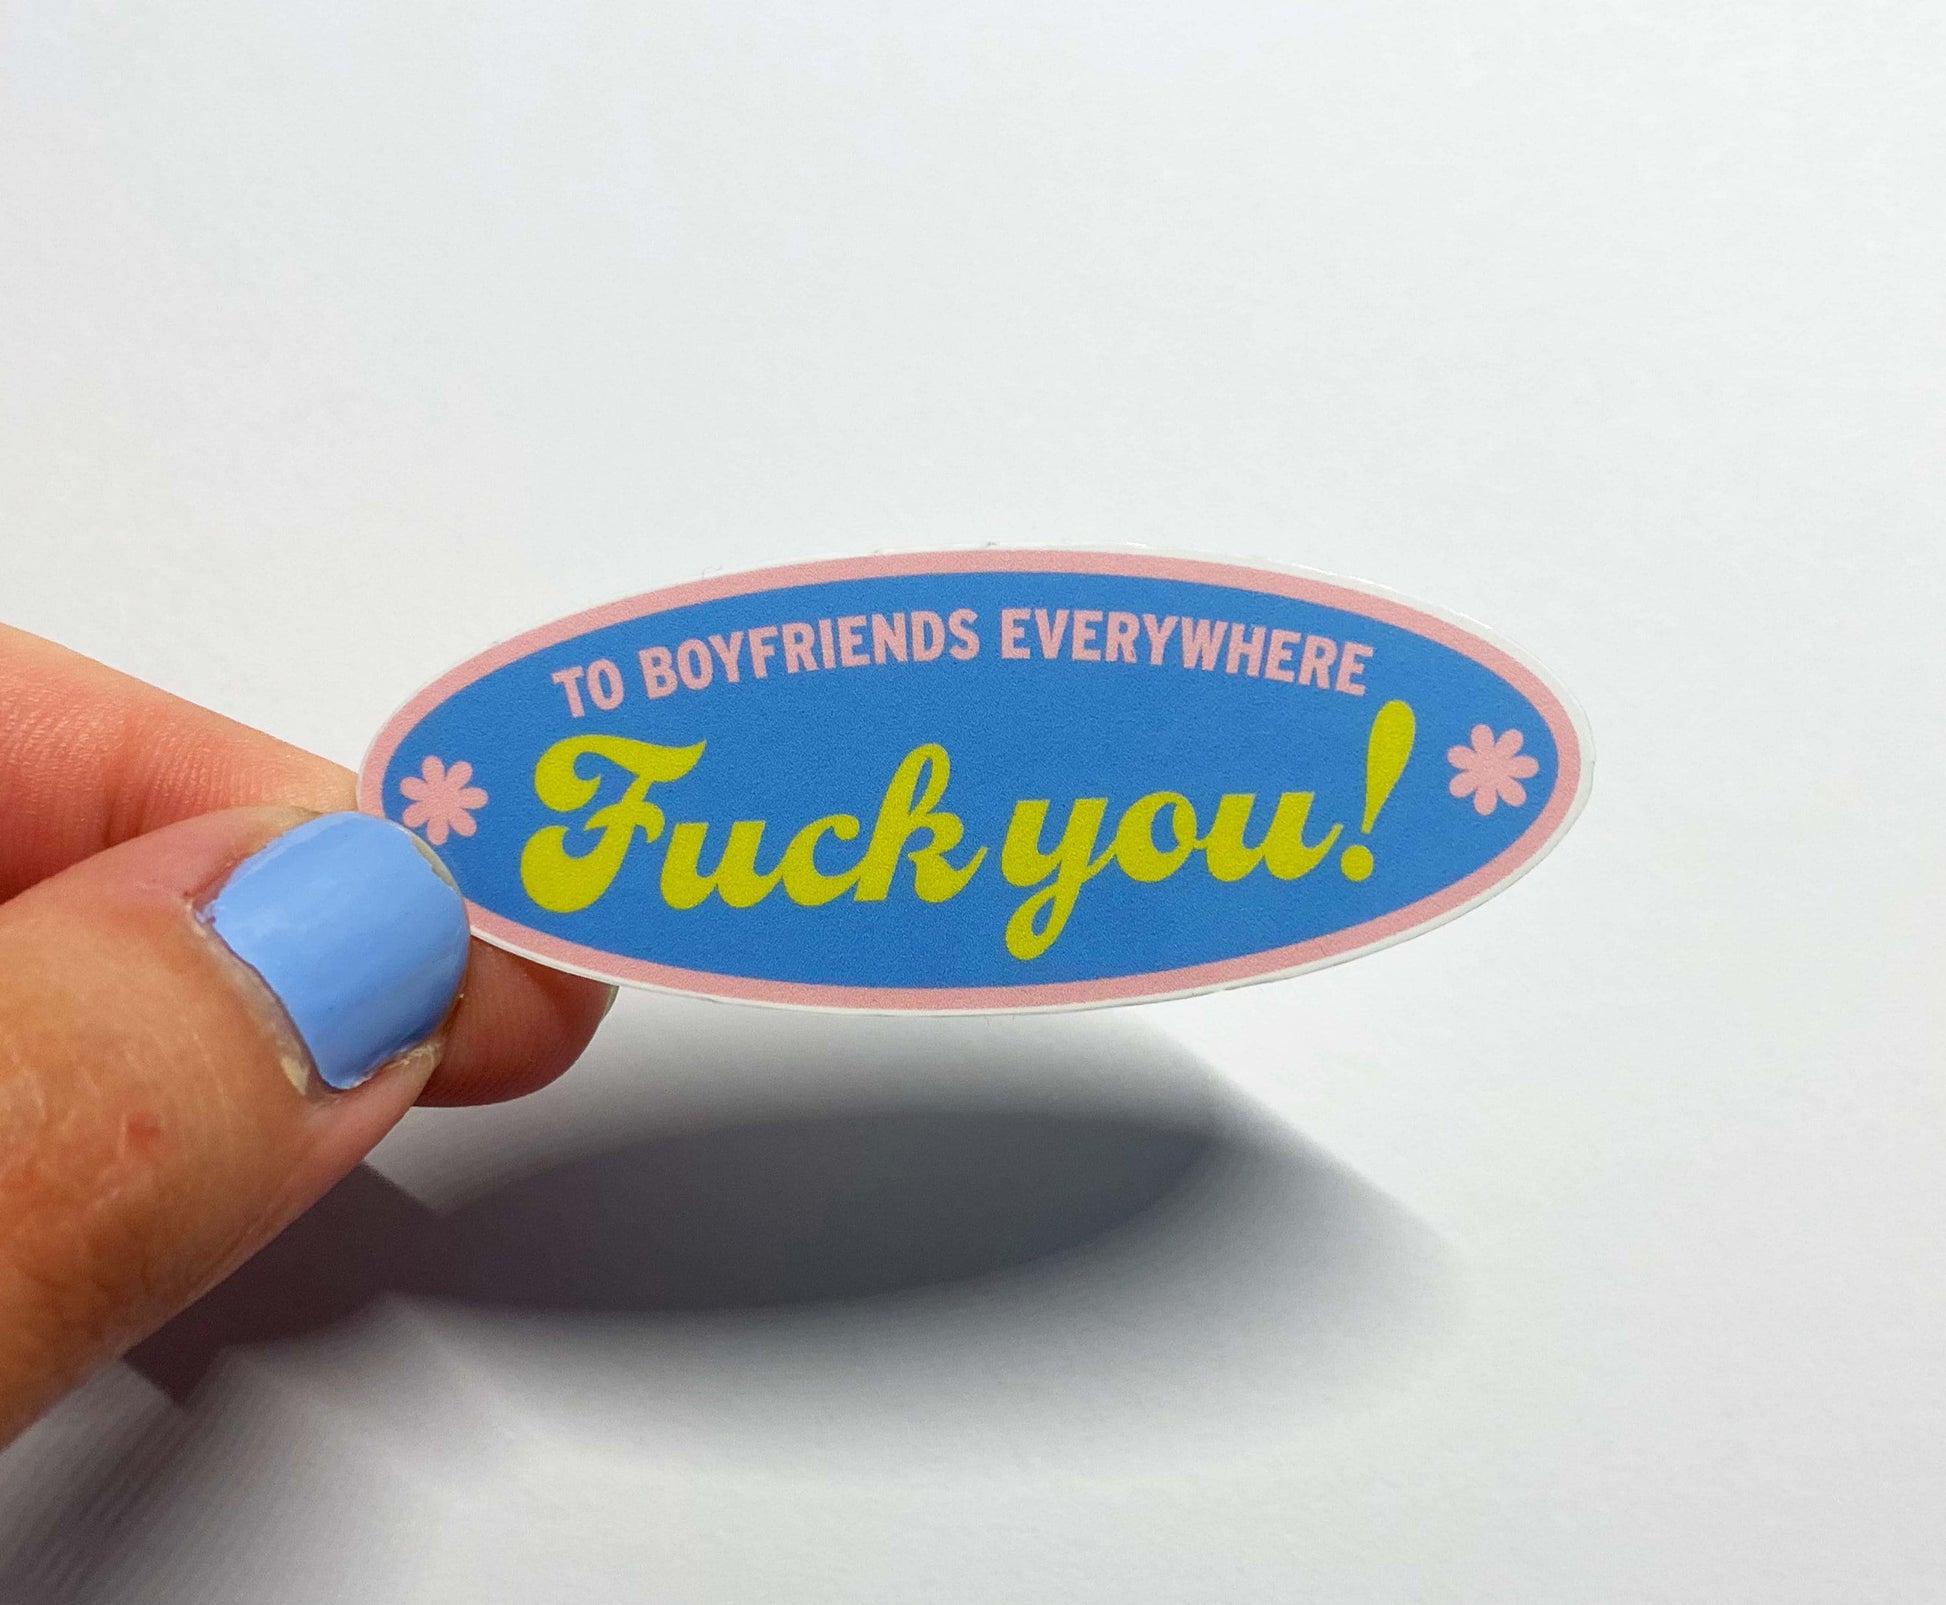 Boyfriends Song Sticker & Car Bumper Sticker: "To Boyfriends Everywhere F*ck You" - Harry Styles Inspired